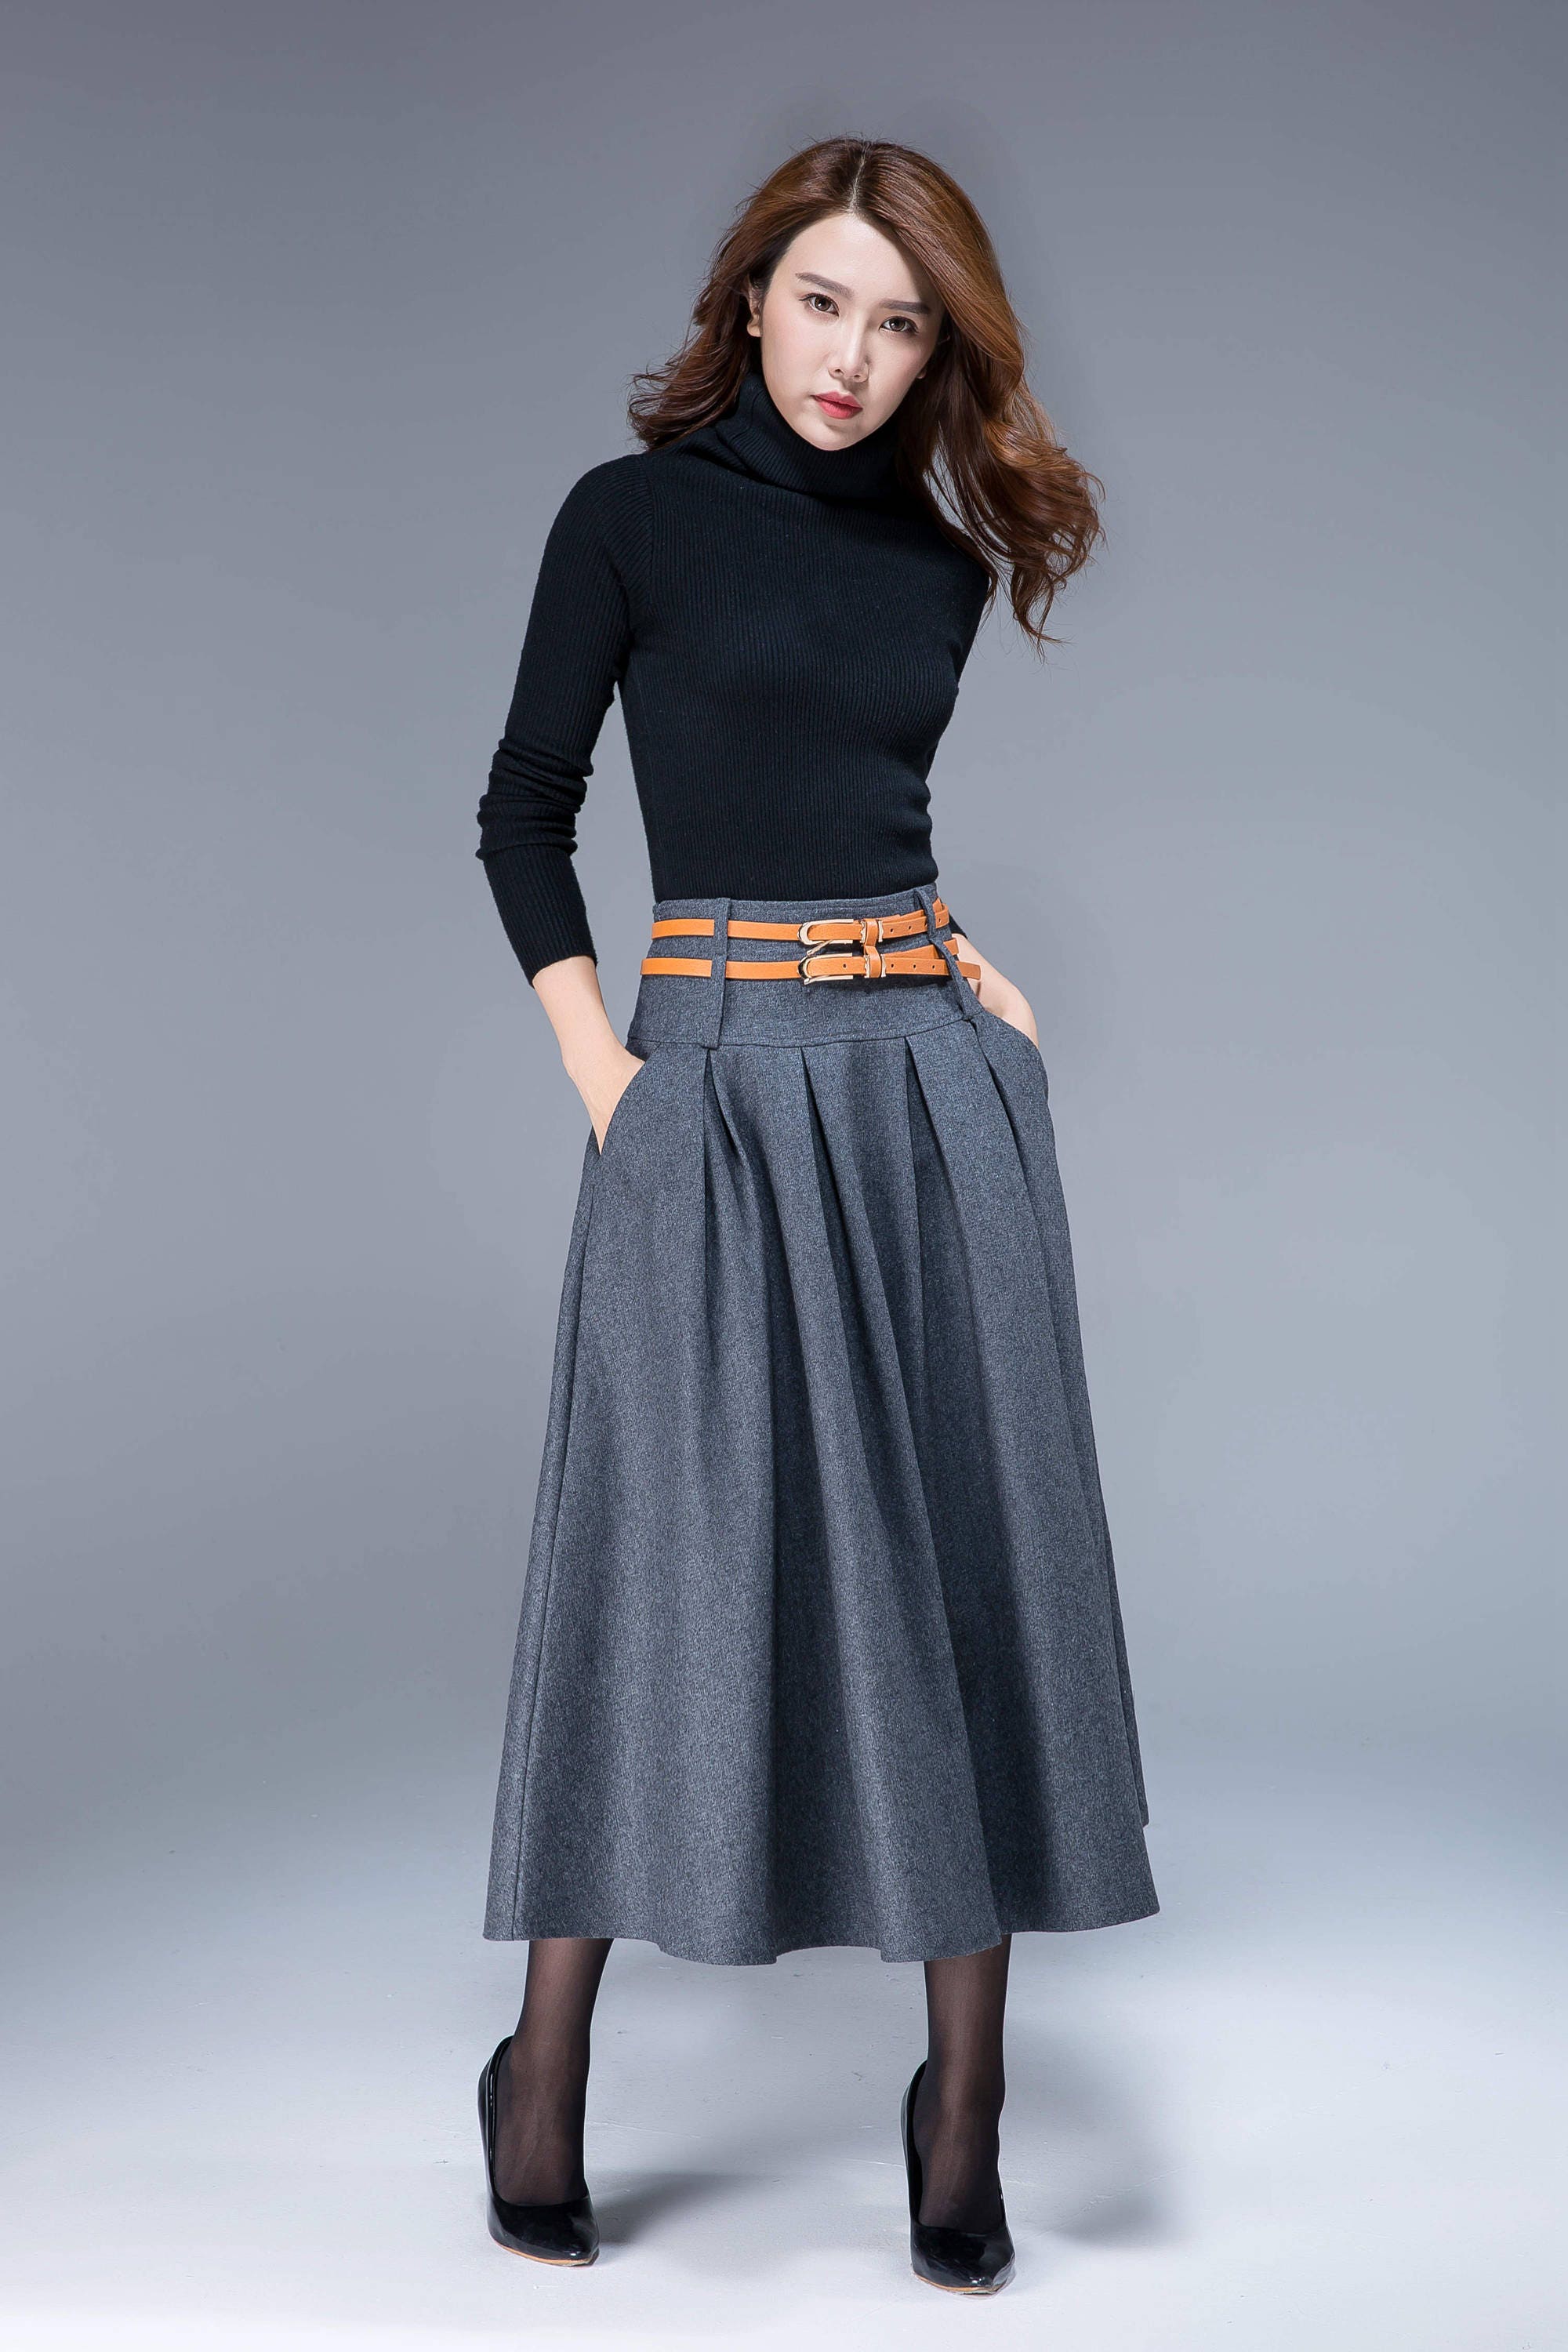 Dark gray skirt midi skirt wool skirt wide waist band | Etsy